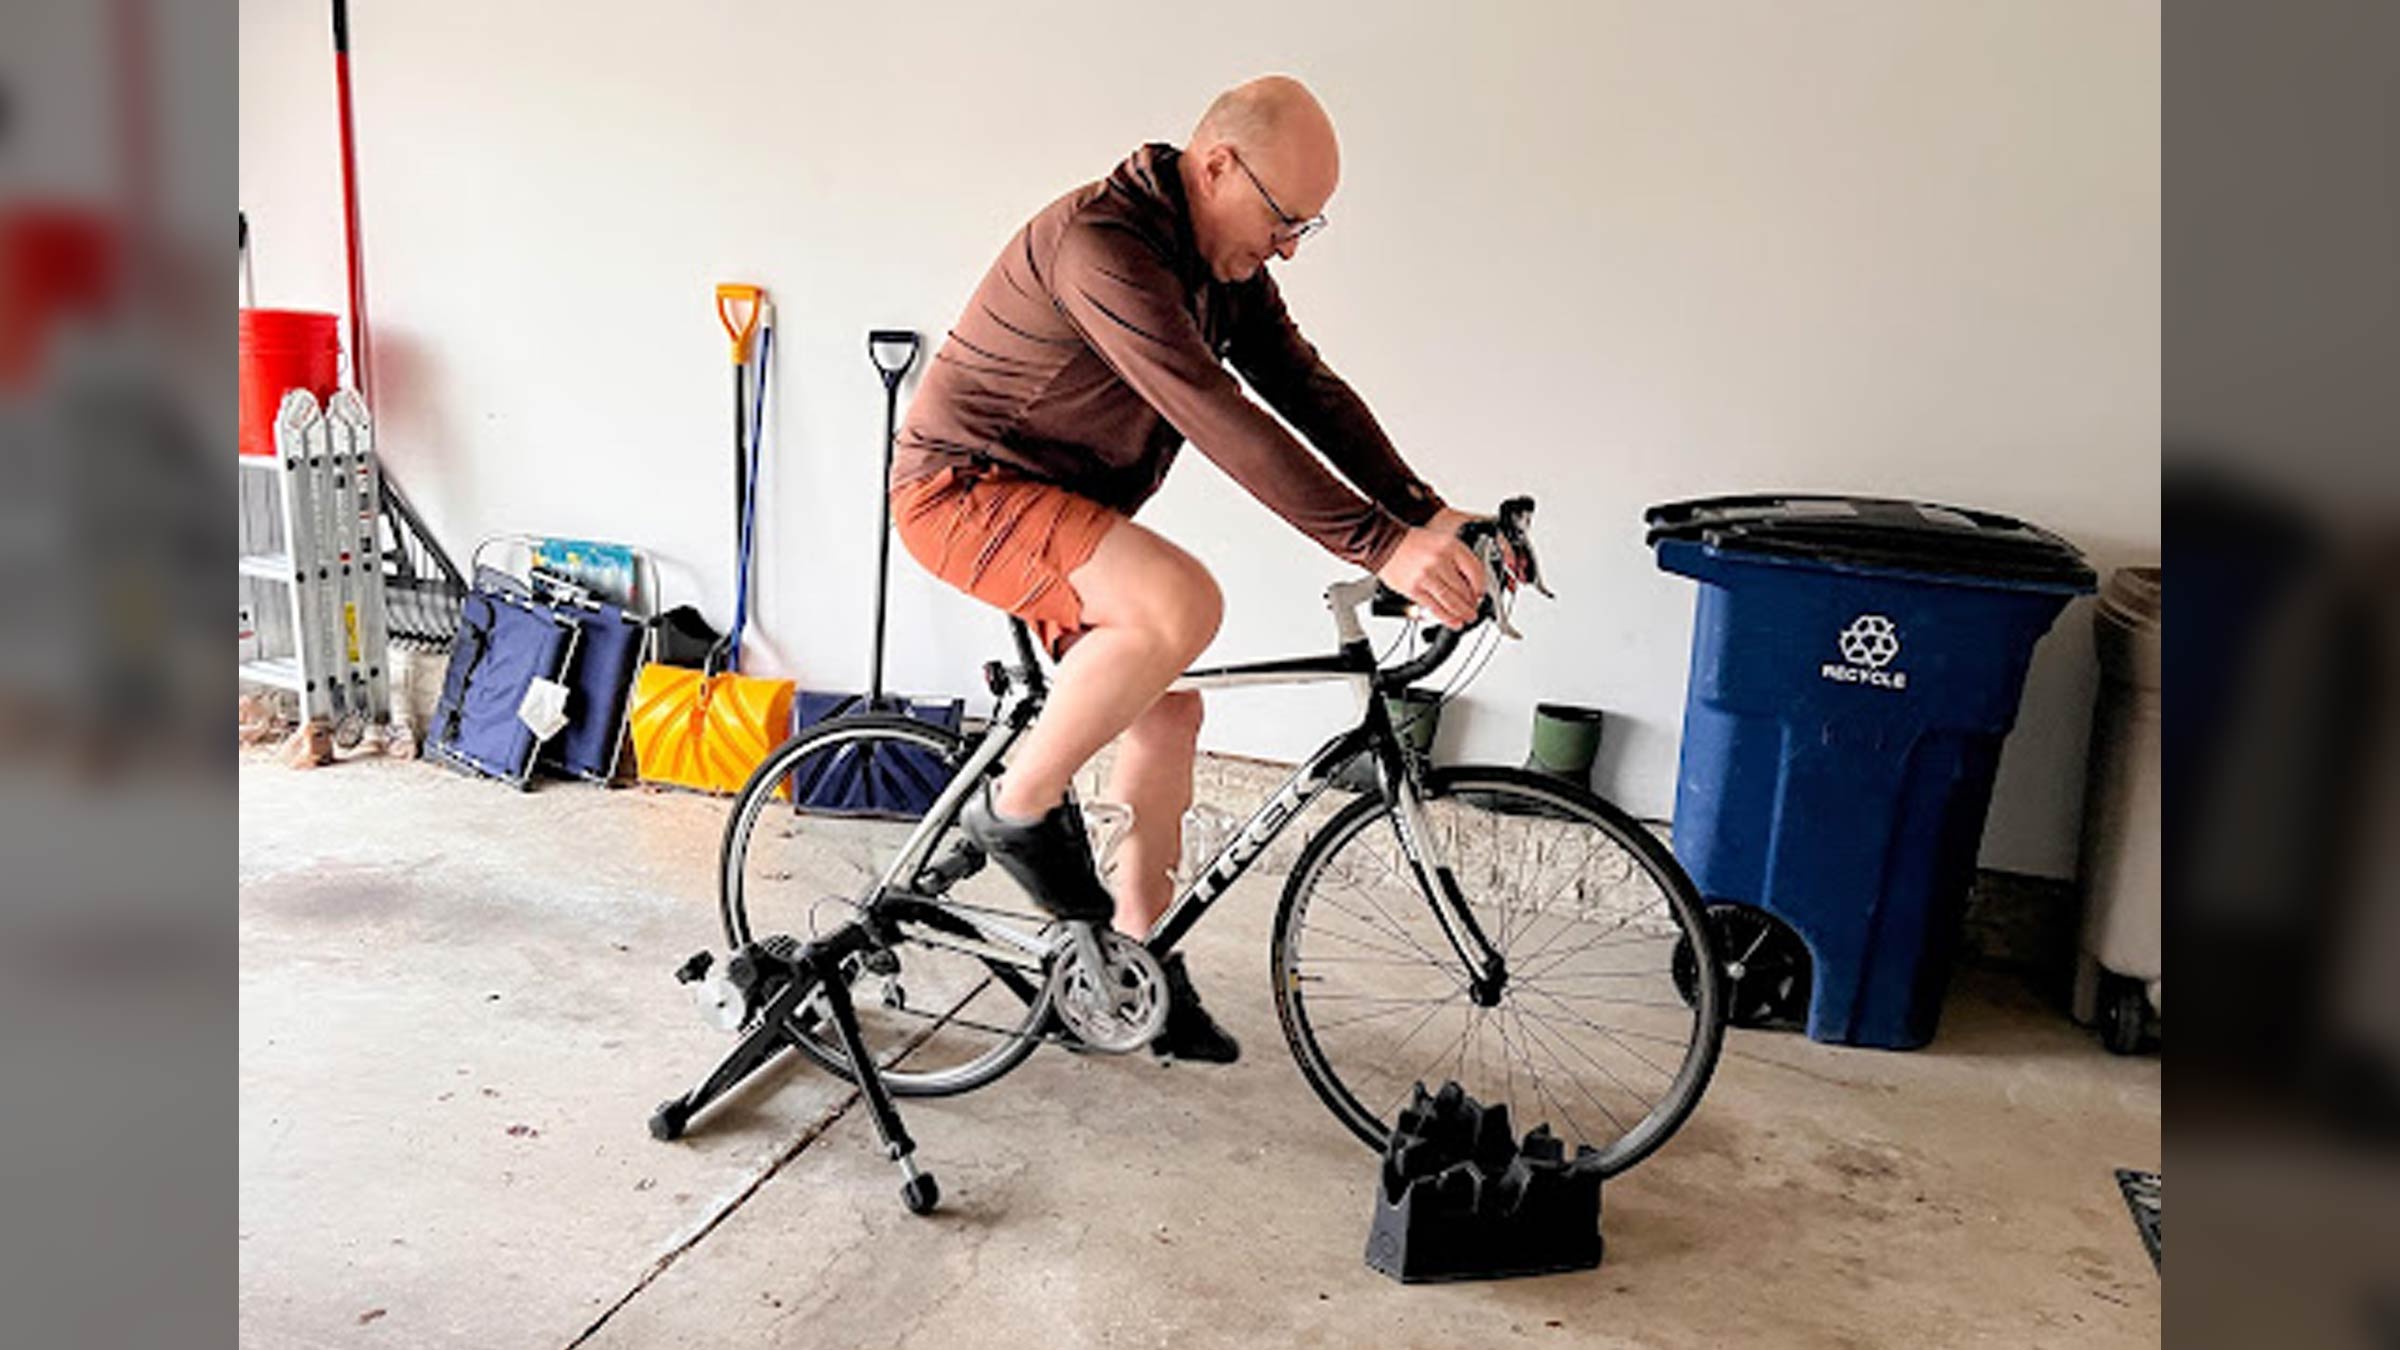 Angel Kowalski, a cancer survivor, works out on a bike in his garage